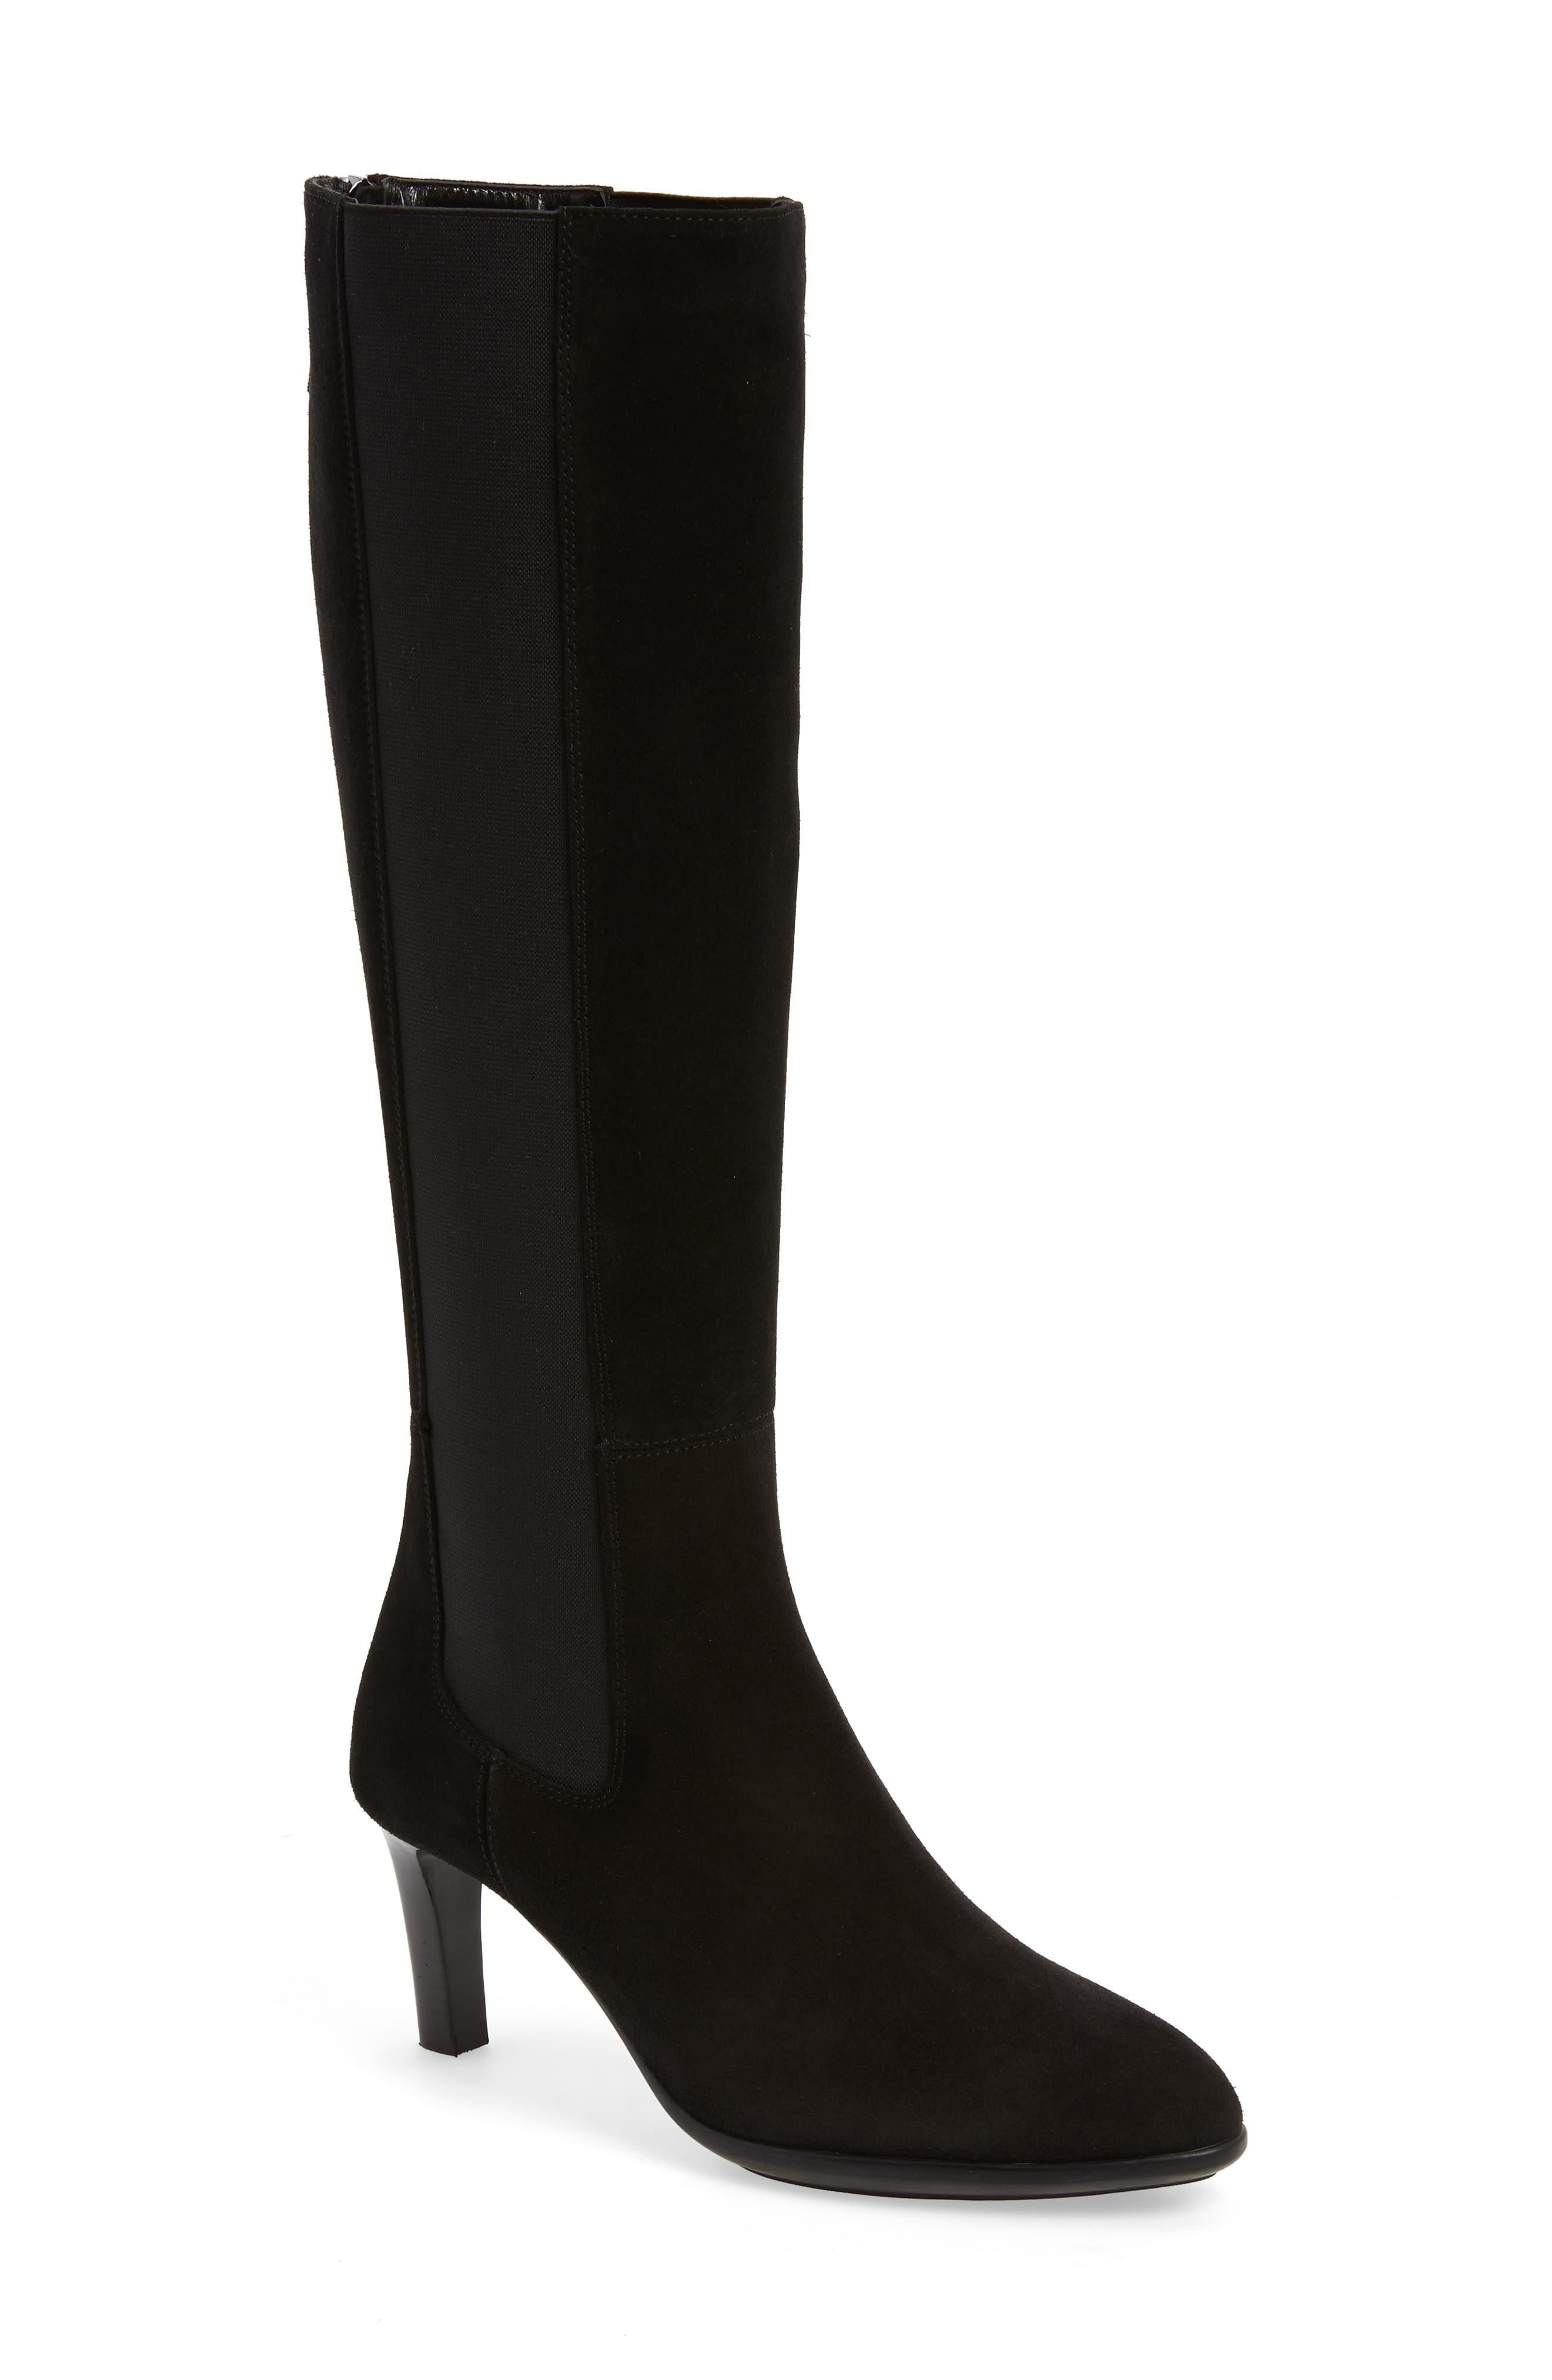 Aquatalia Dahliana Weatherproof Knee High Boot in Black - Lyst